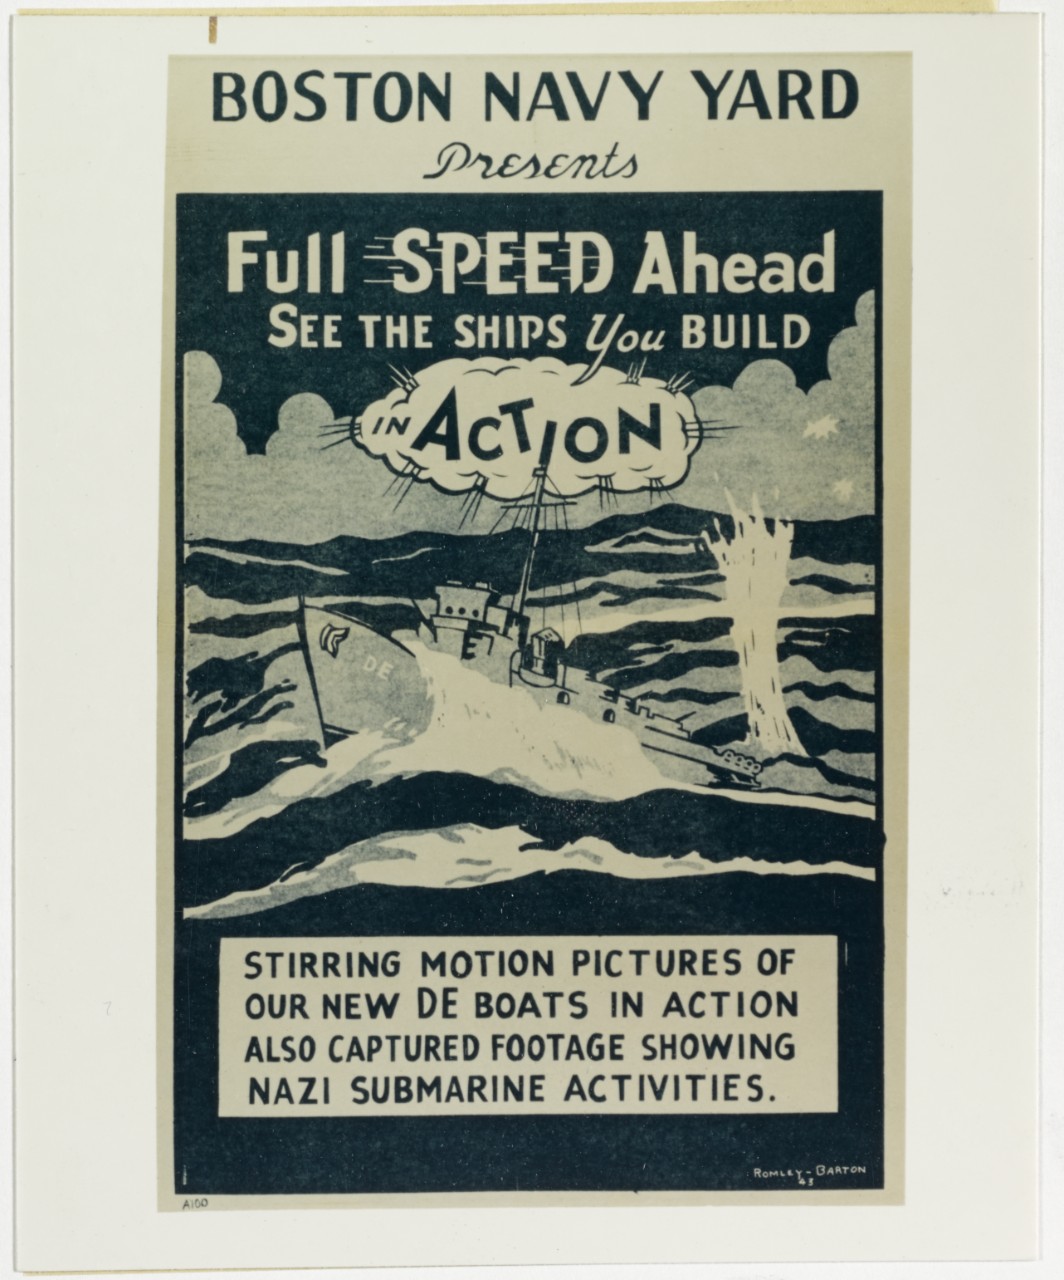 Poster:  "Boston Navy Yard presents"